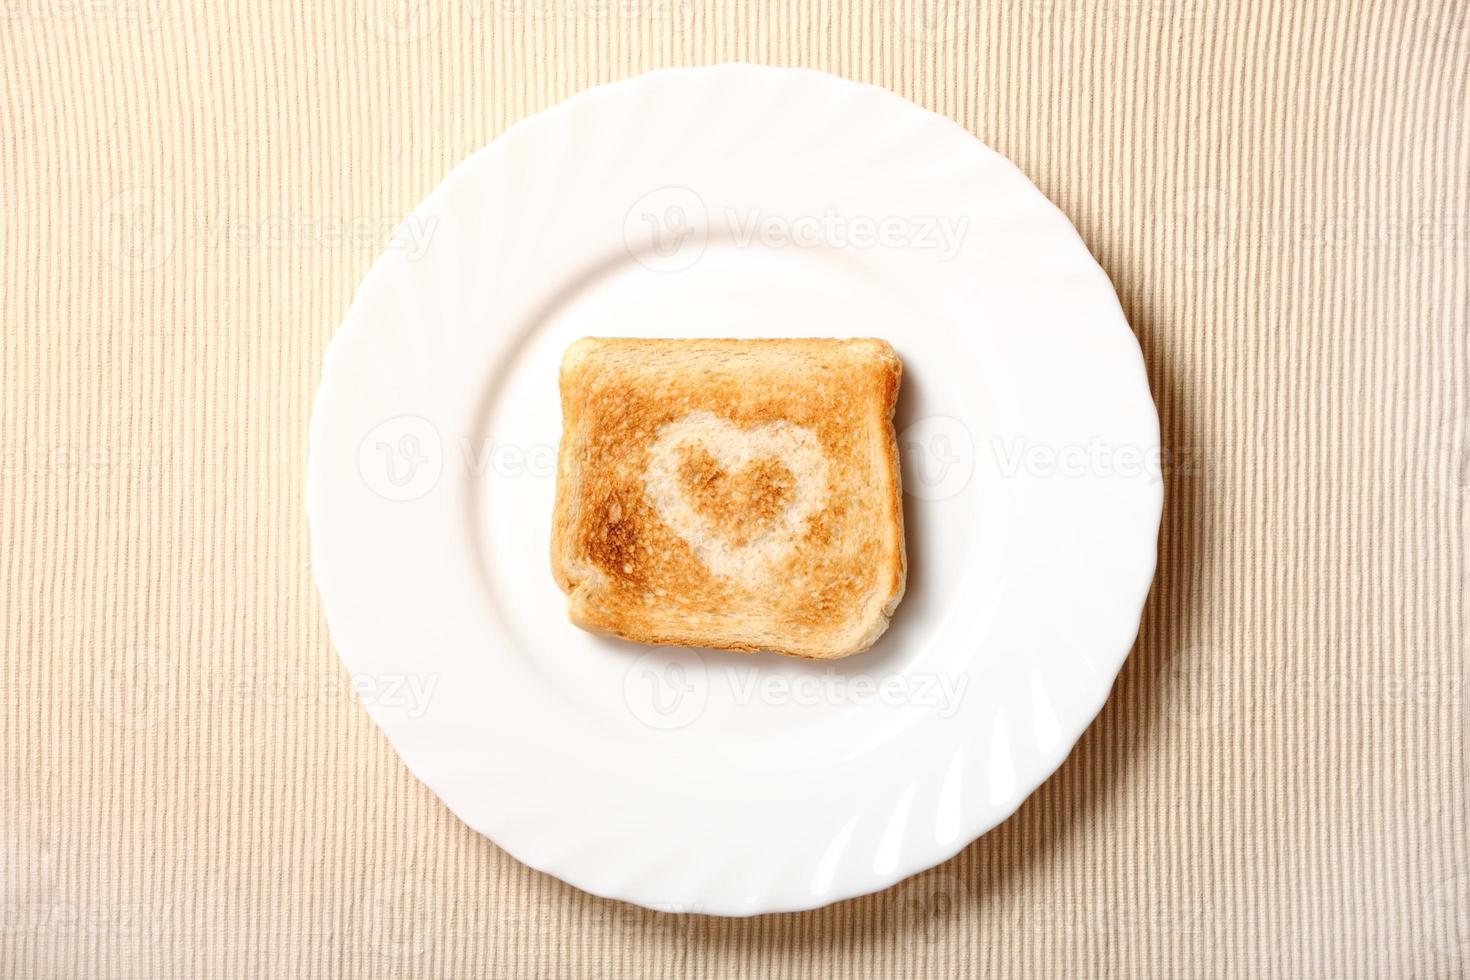 Toast on the plate photo